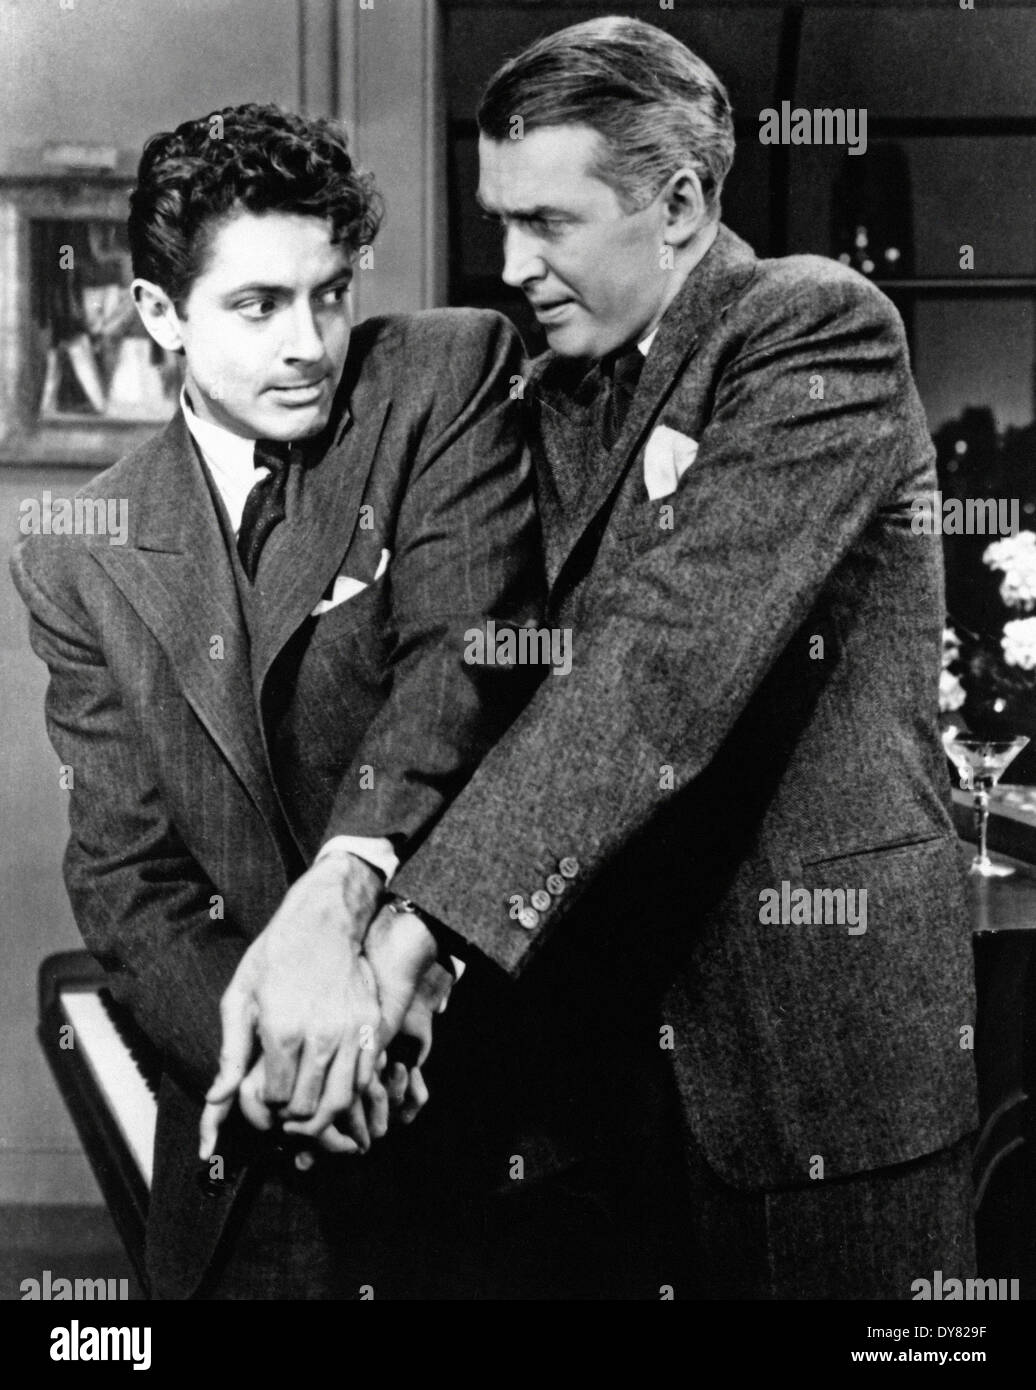 The Rope - James Stewart, John Dall, Farley Granger - Director : Alfred Hitchcock - 1948 Stock Photo